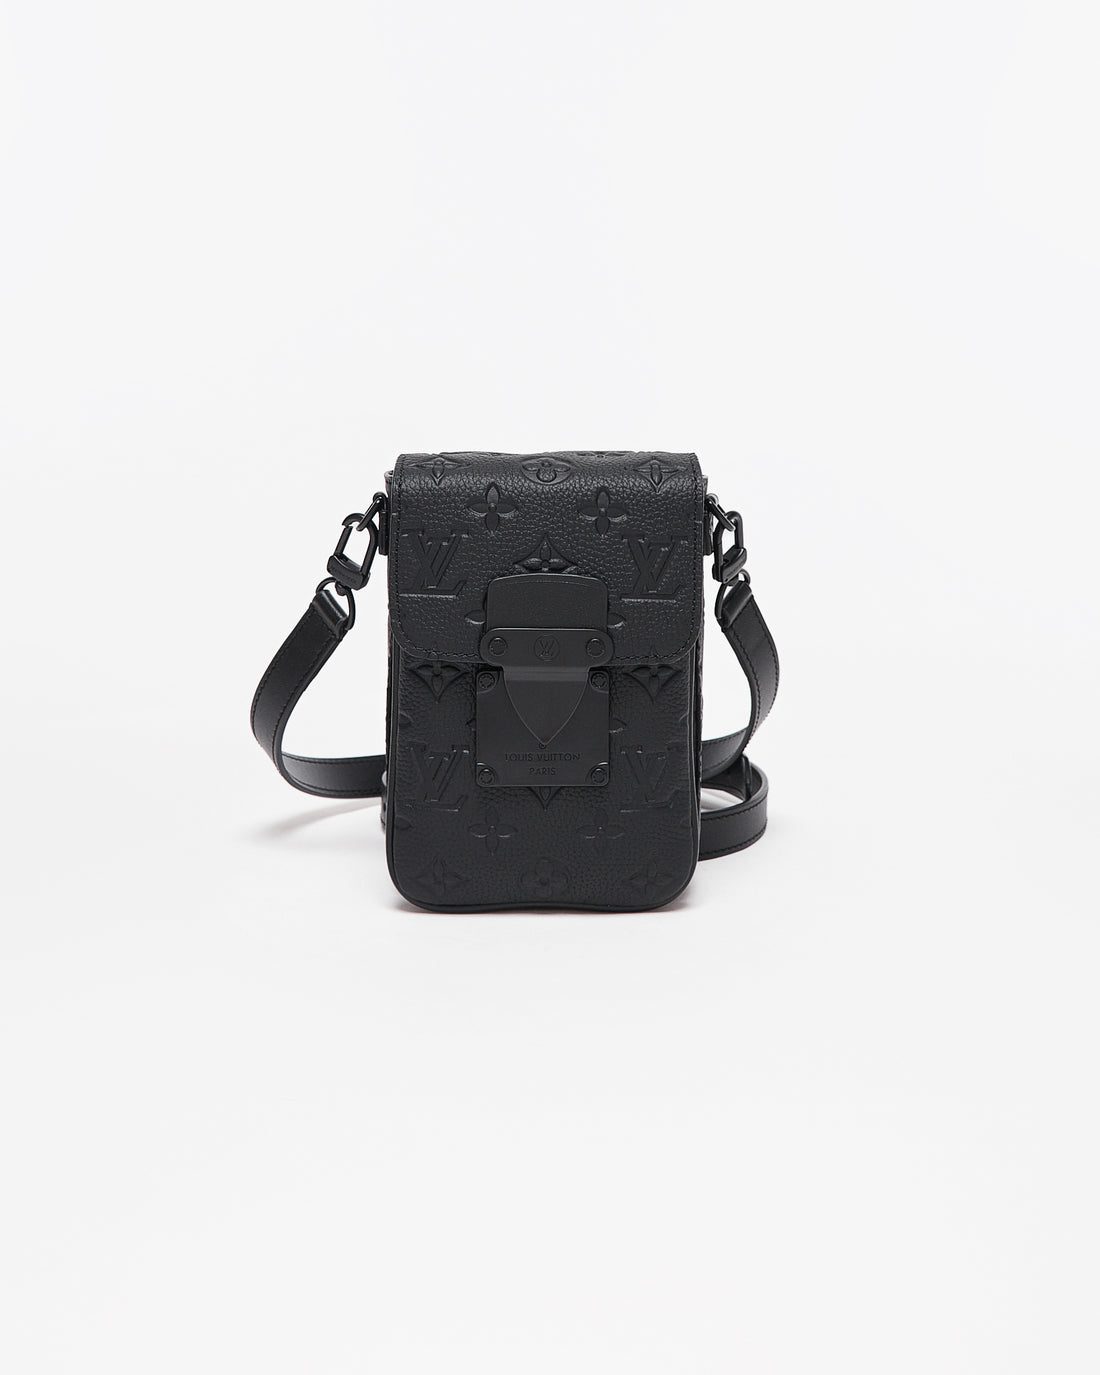 LV S-Lock Vertical Wearable Black Bag 159